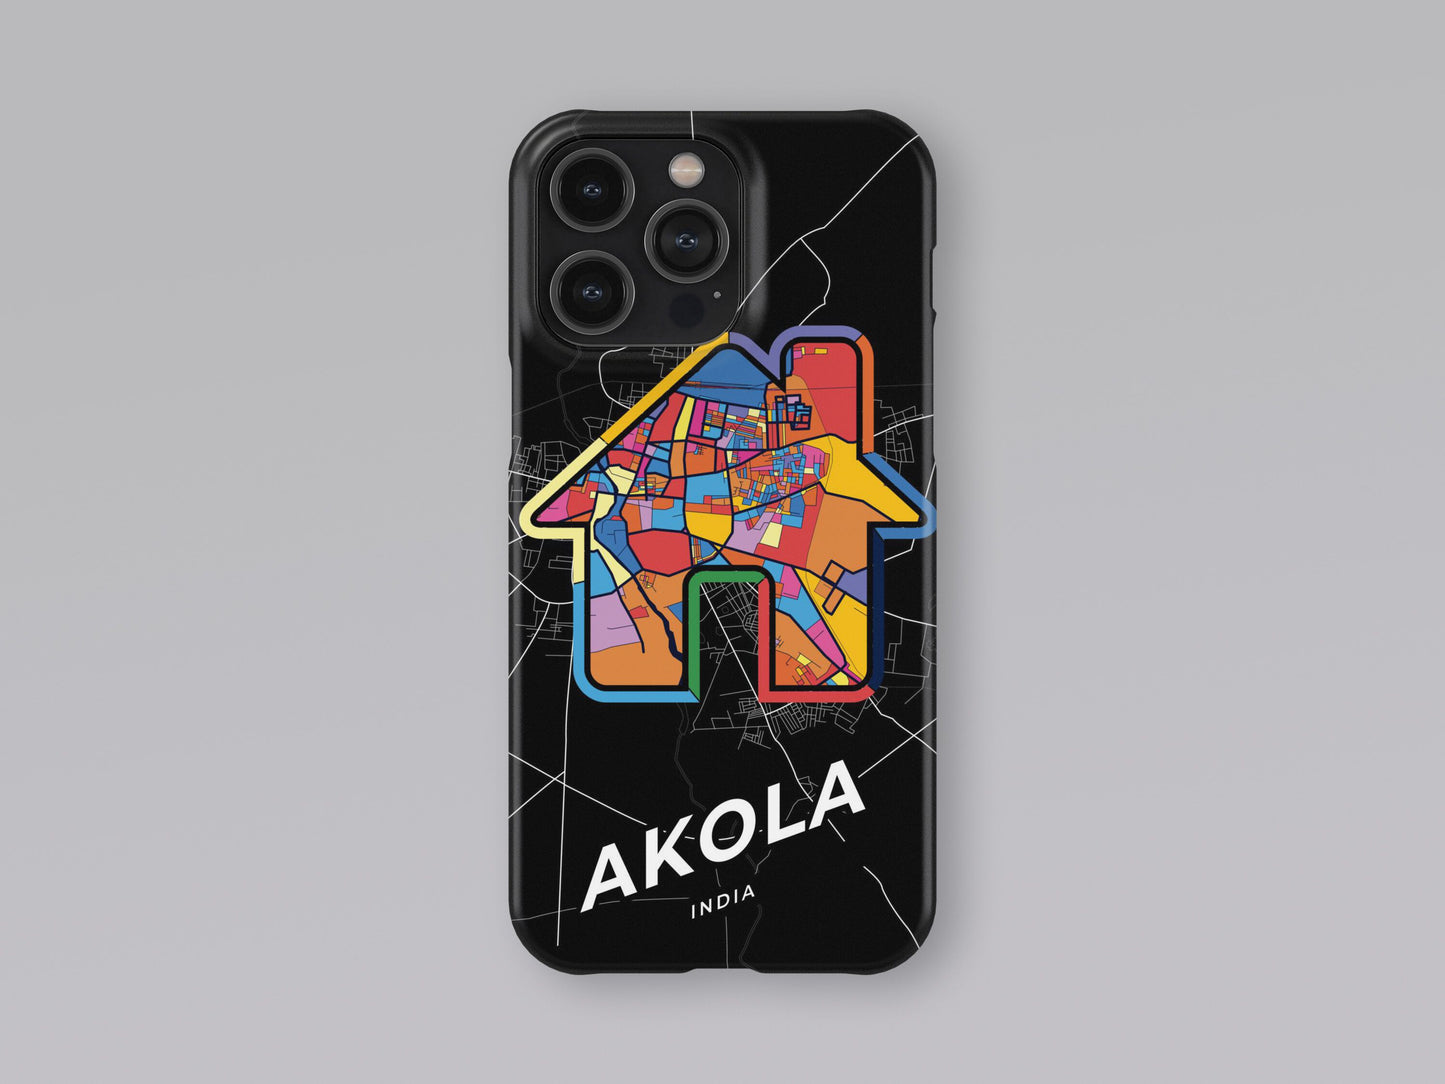 Akola India slim phone case with colorful icon. Birthday, wedding or housewarming gift. Couple match cases. 3